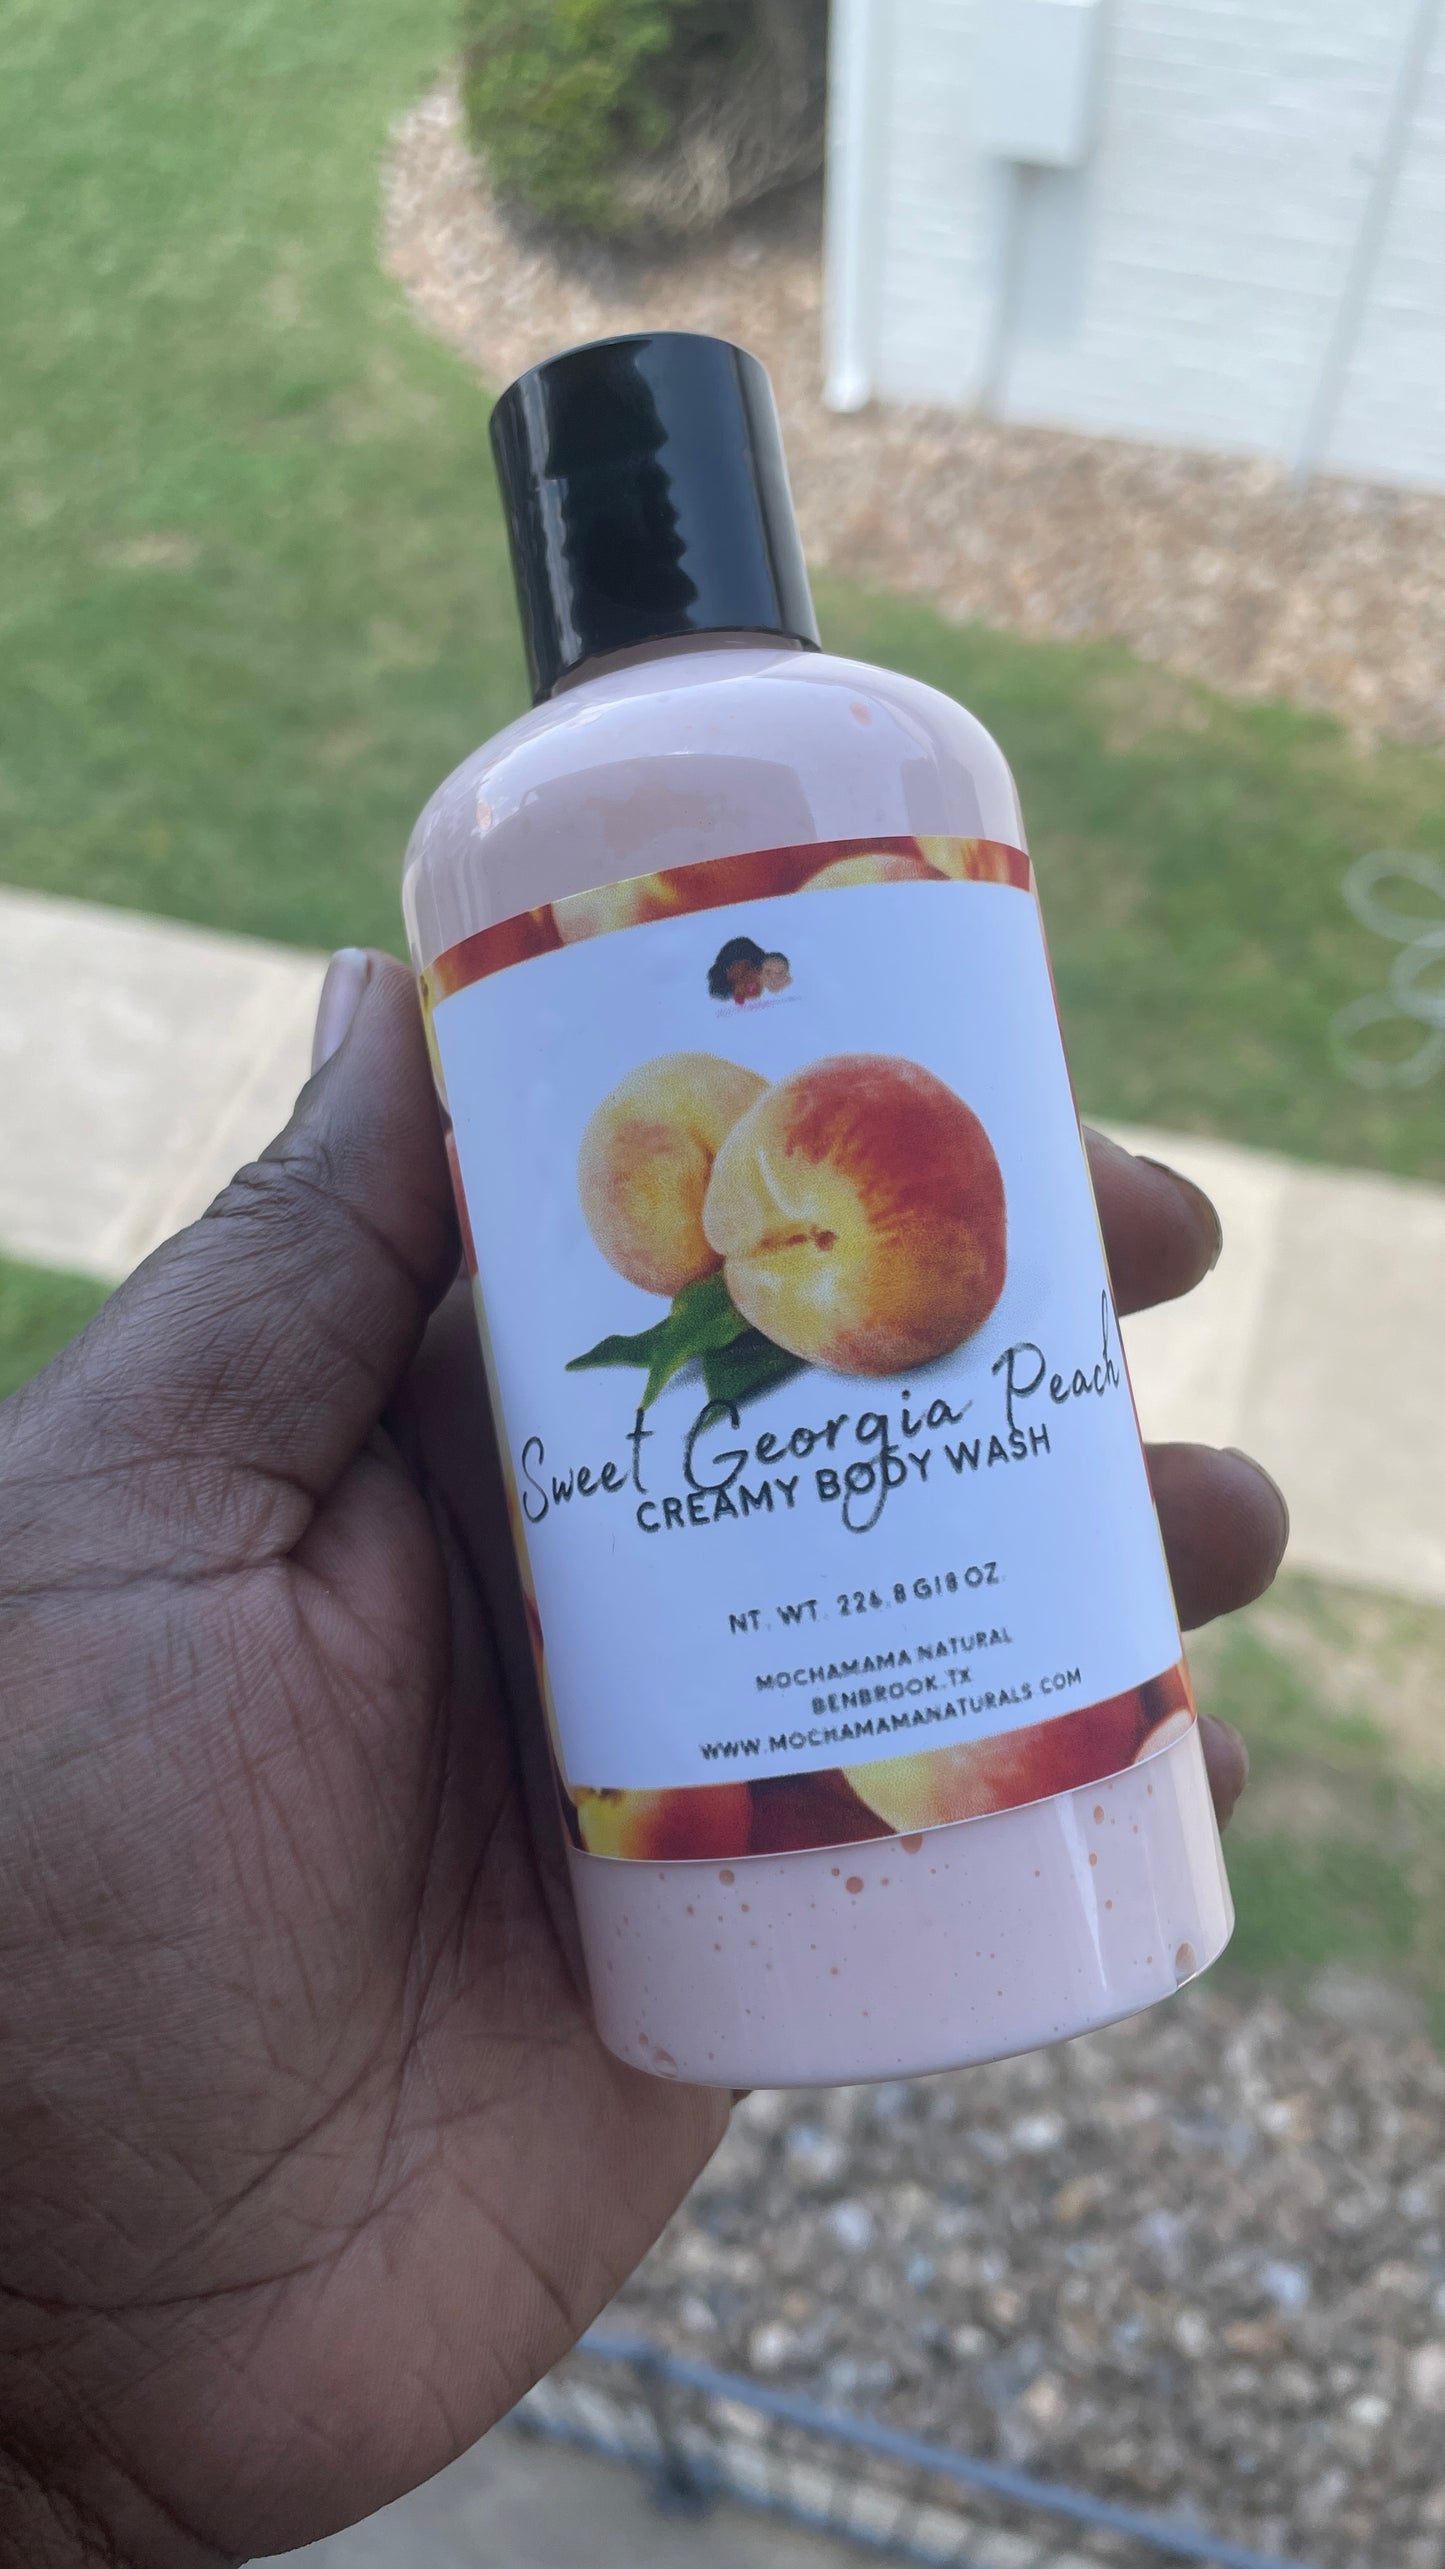 Sweet Georgia Peach Creamy Body Wash